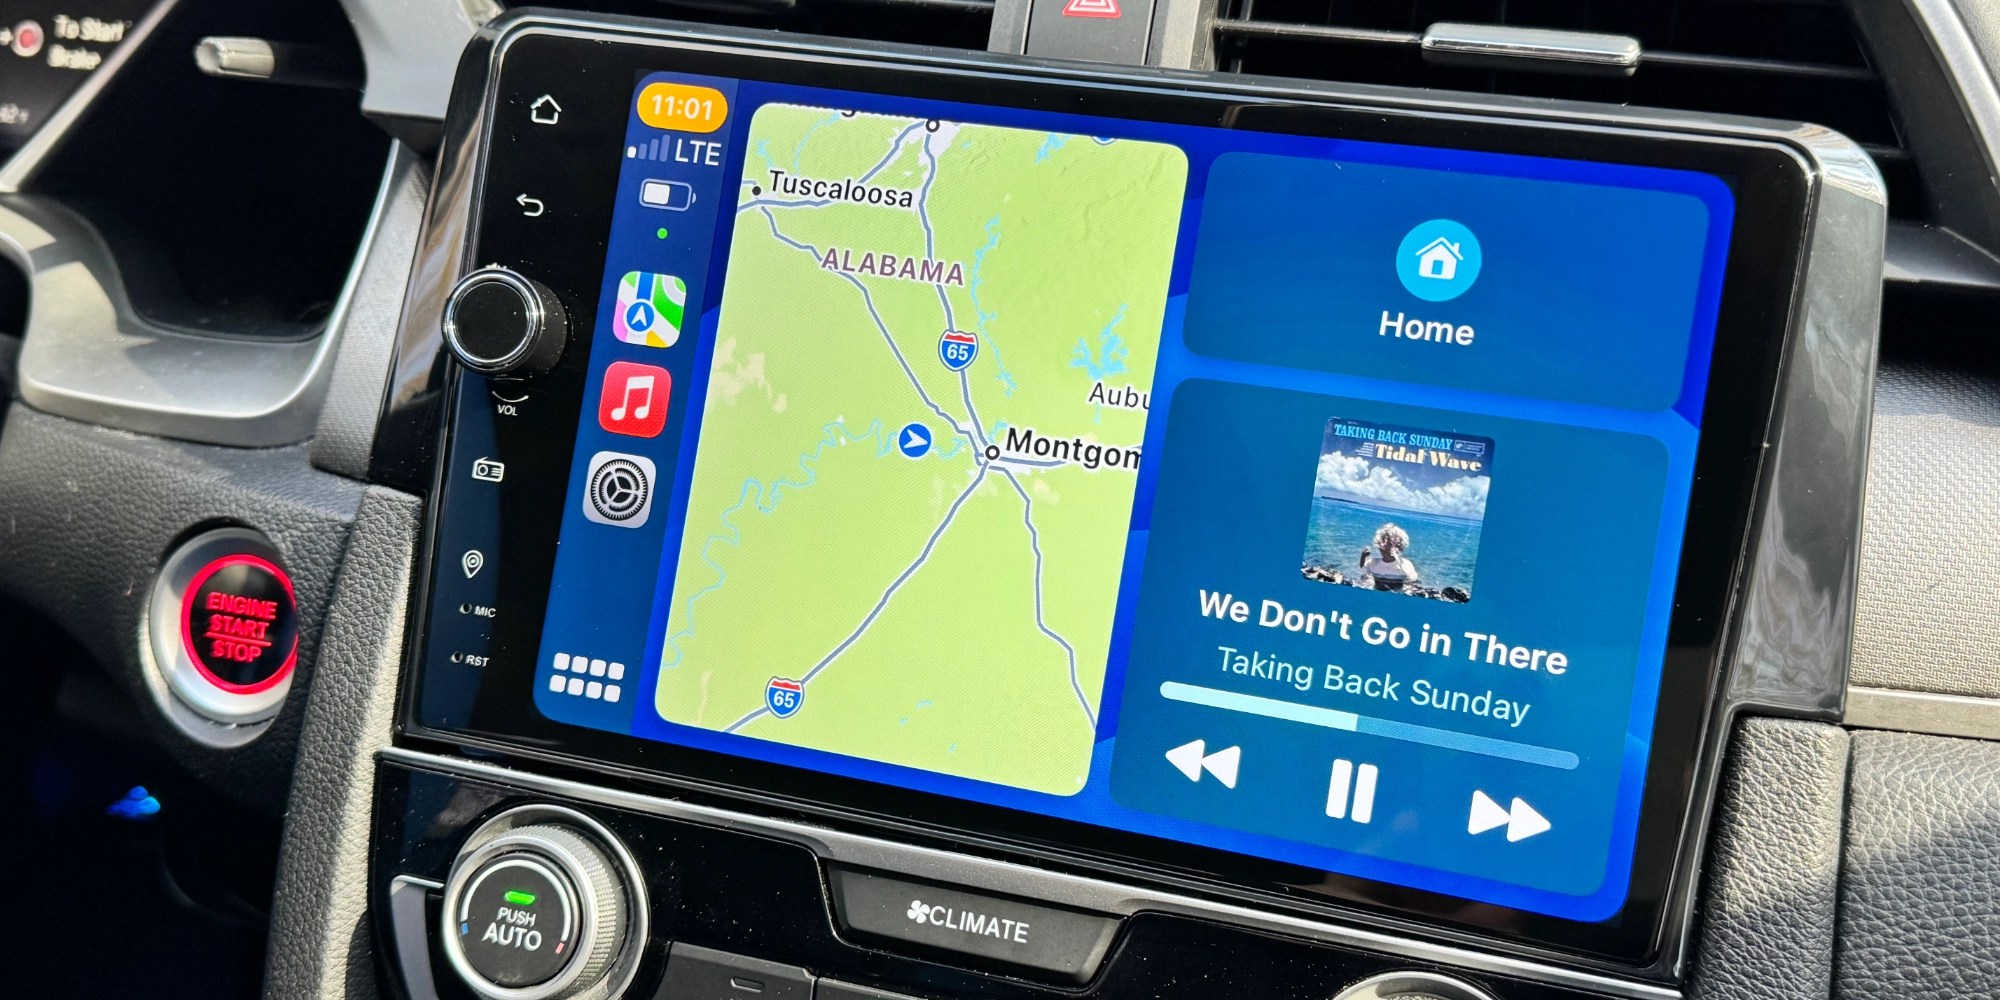 Honda Apple CarPlay®  How To Connect To Apple CarPlay®